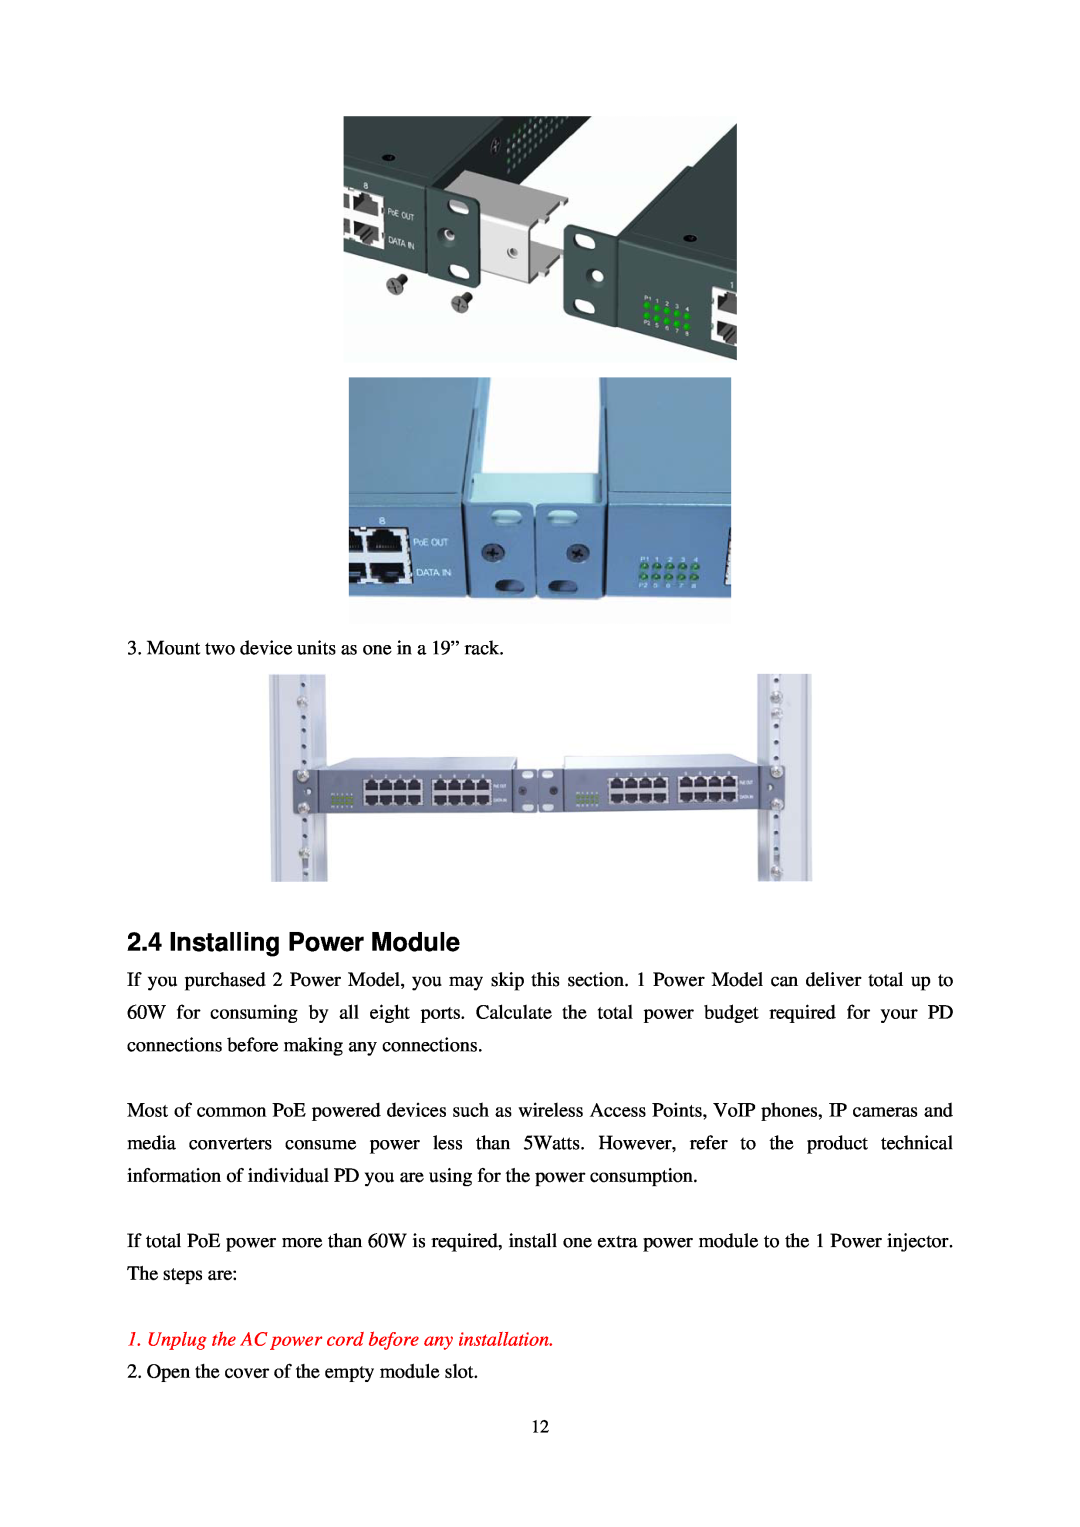 KTI Networks KPOE-800-1P, KPOE-800-2P manual Installing Power Module, Unplug the AC power cord before any installation 